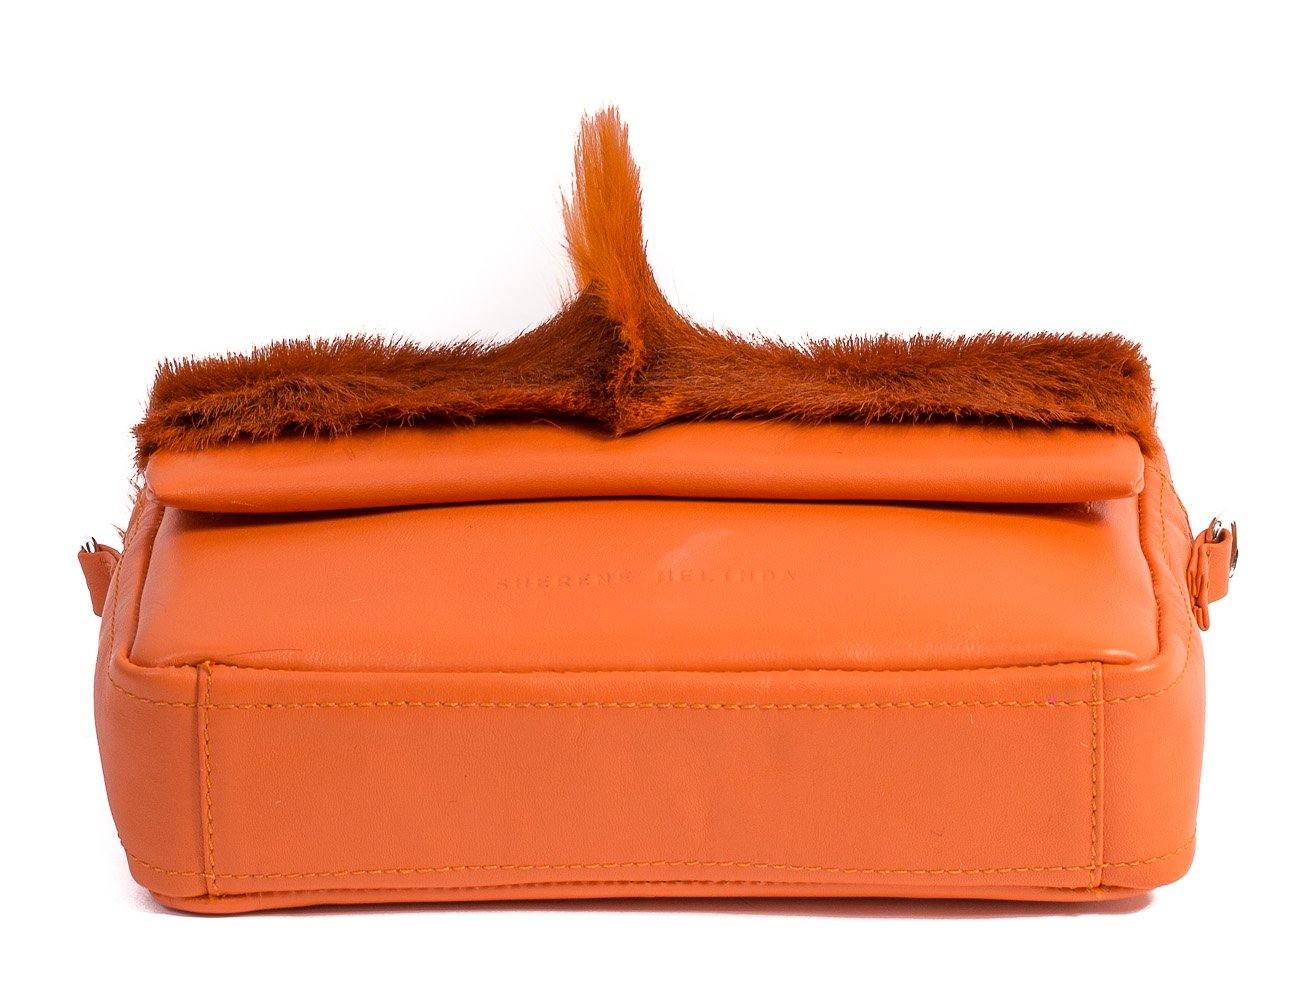 sherene melinda springbok hair-on-hide orange leather shoulder bag Fan bottom